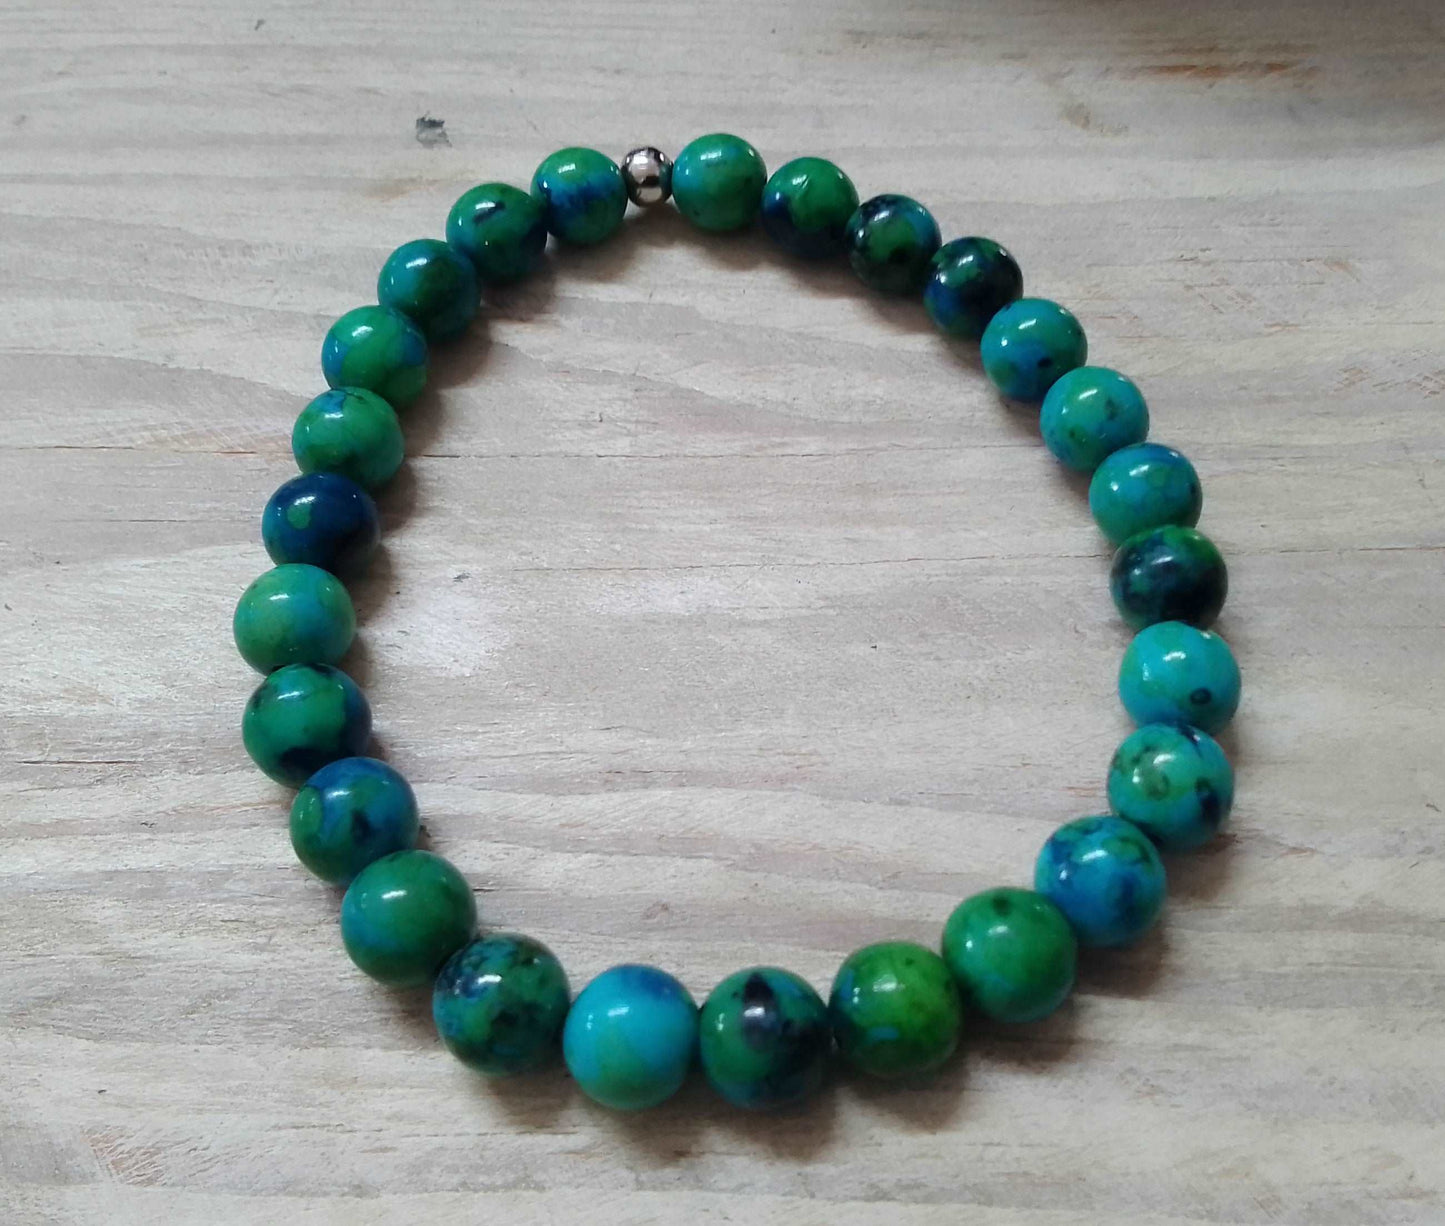 Azurite Natural Stone Bracelet 8mm Beads